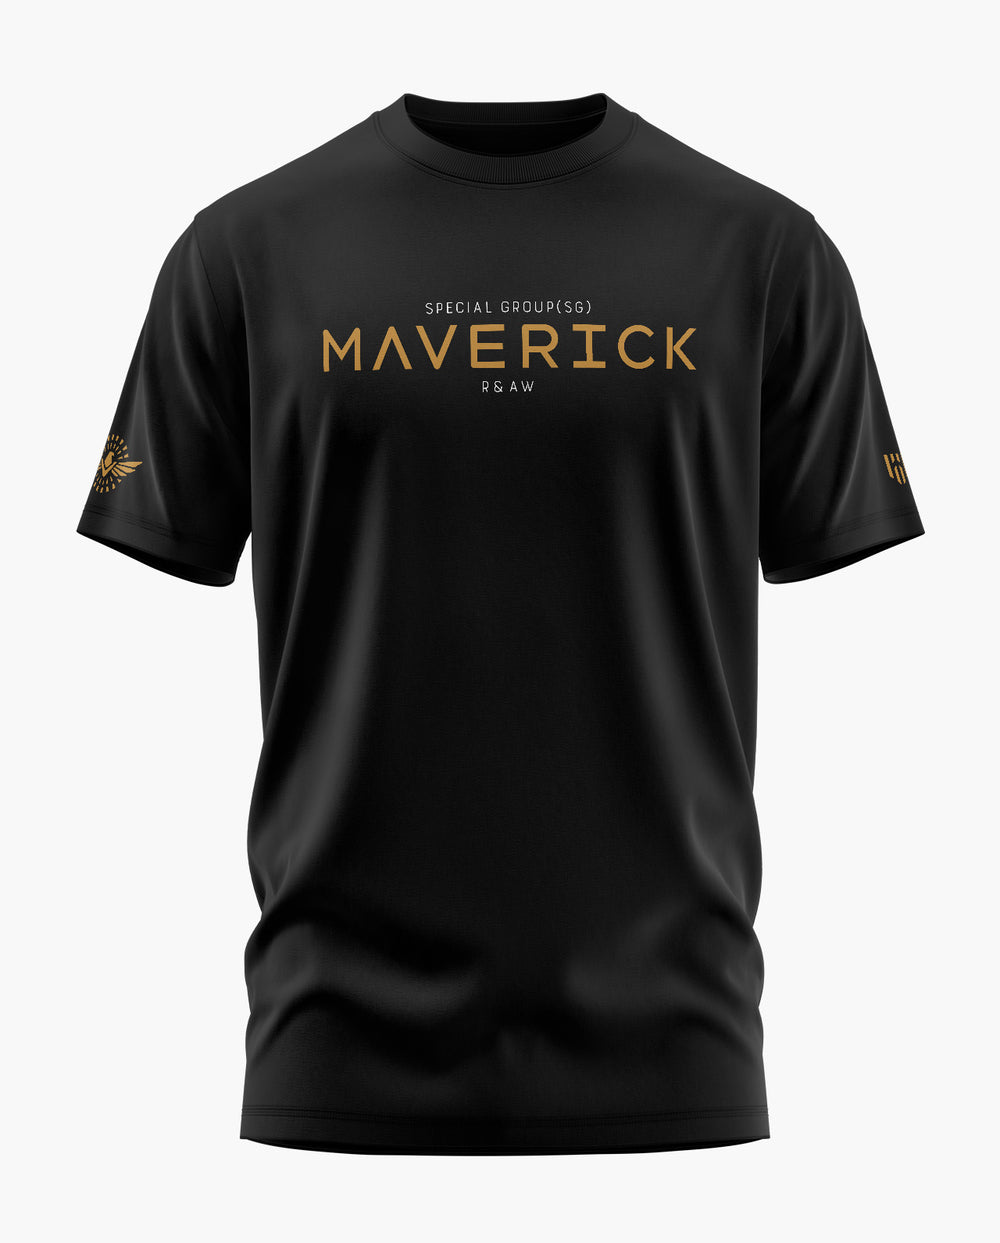 MAVERICK (SG) T-Shirt - Aero Armour